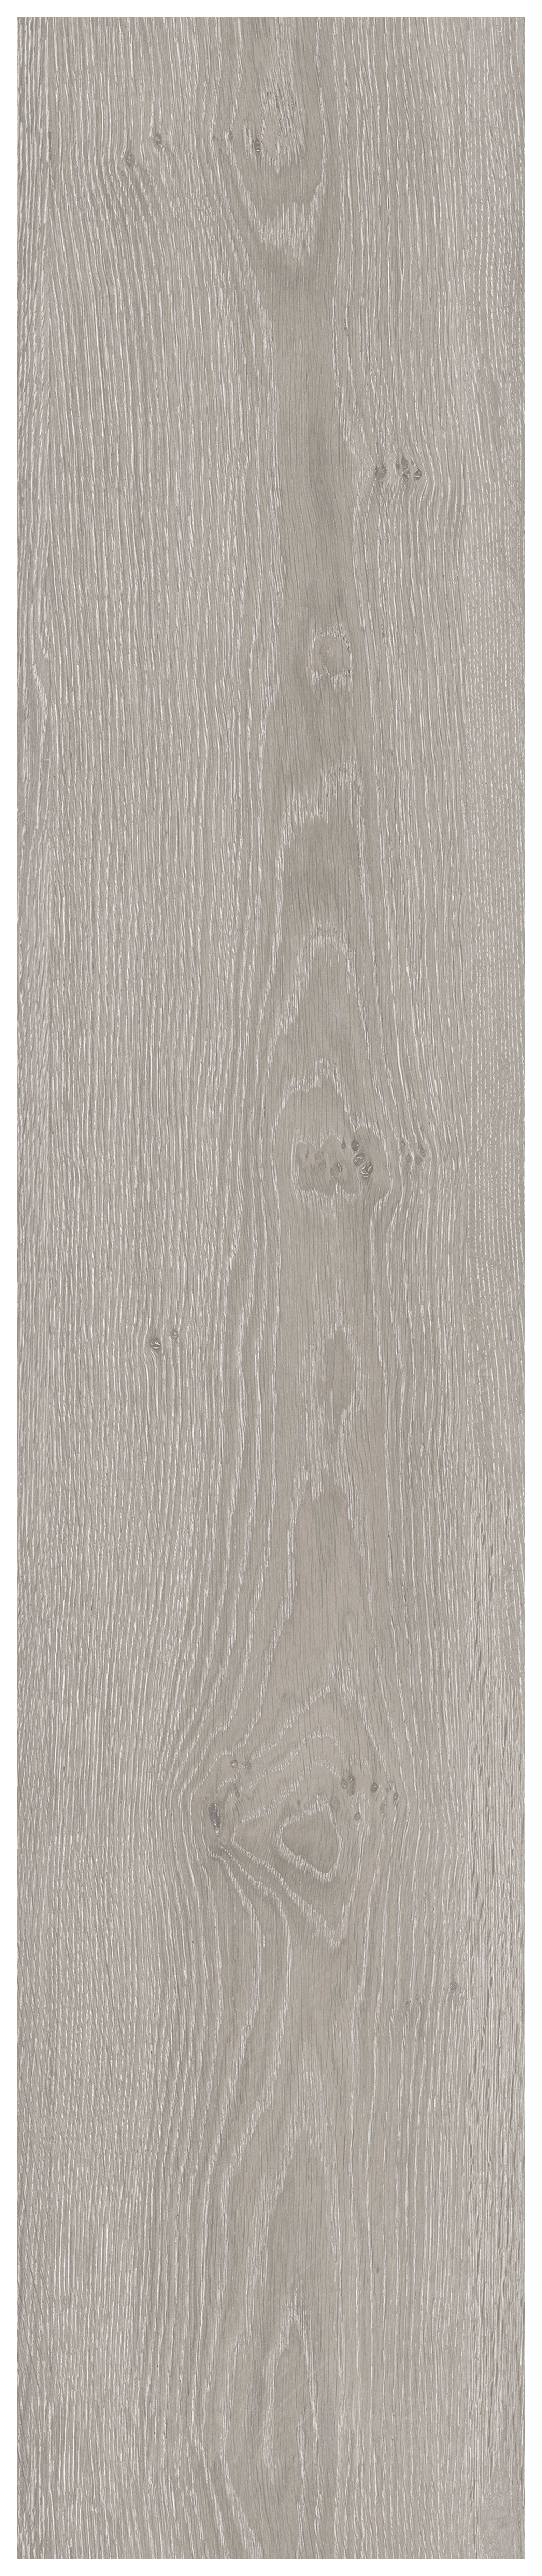 Ludlow Limed Light Oak Herringbone SPC Flooring with Integrated Underlay - Sample